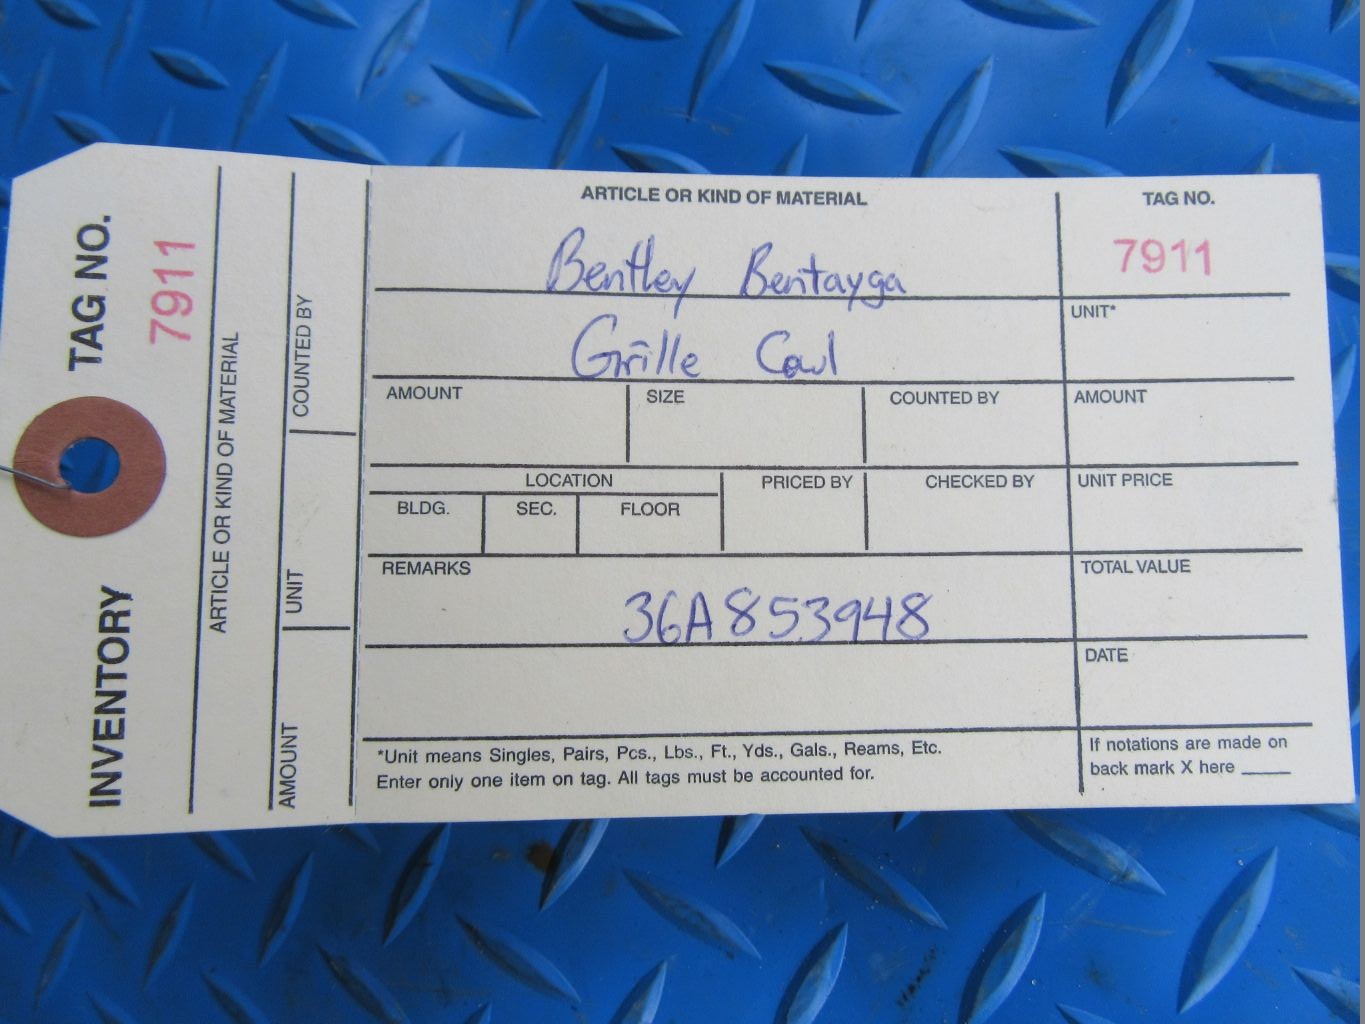 Bentley Bentayga radiator grille cowl cover #7911